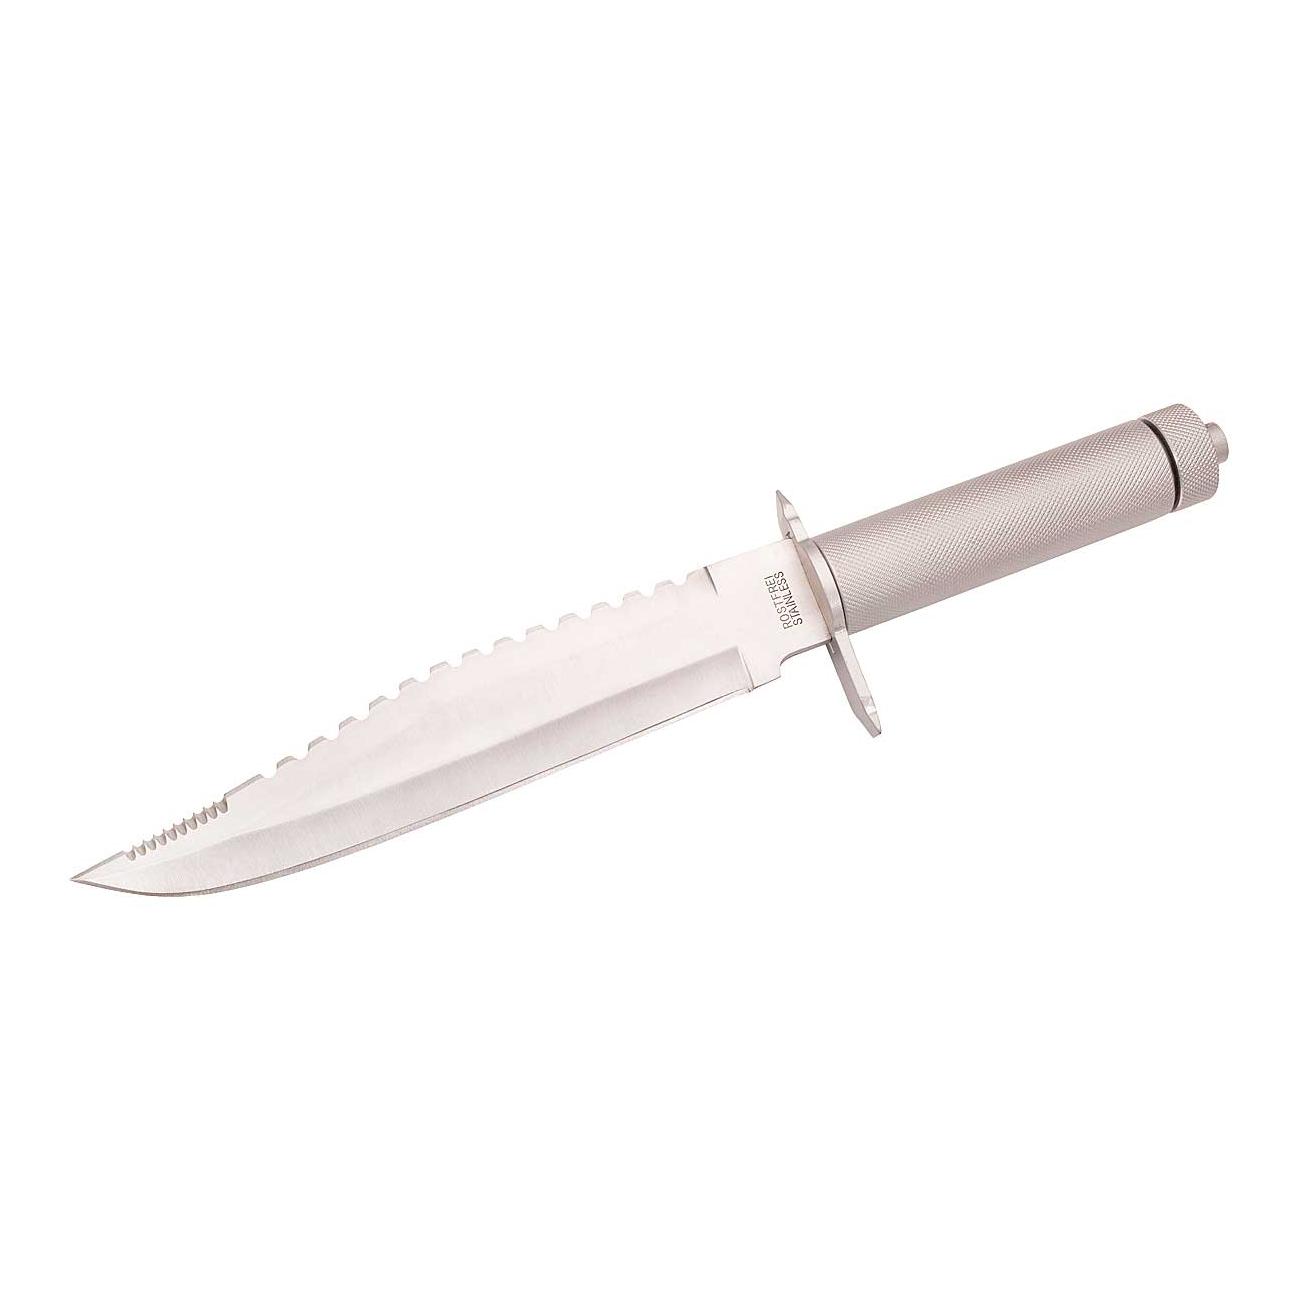 Herbertz Survival-Messer, Stahl AISI 420, Rückensäge, Aluminiumgriff, 